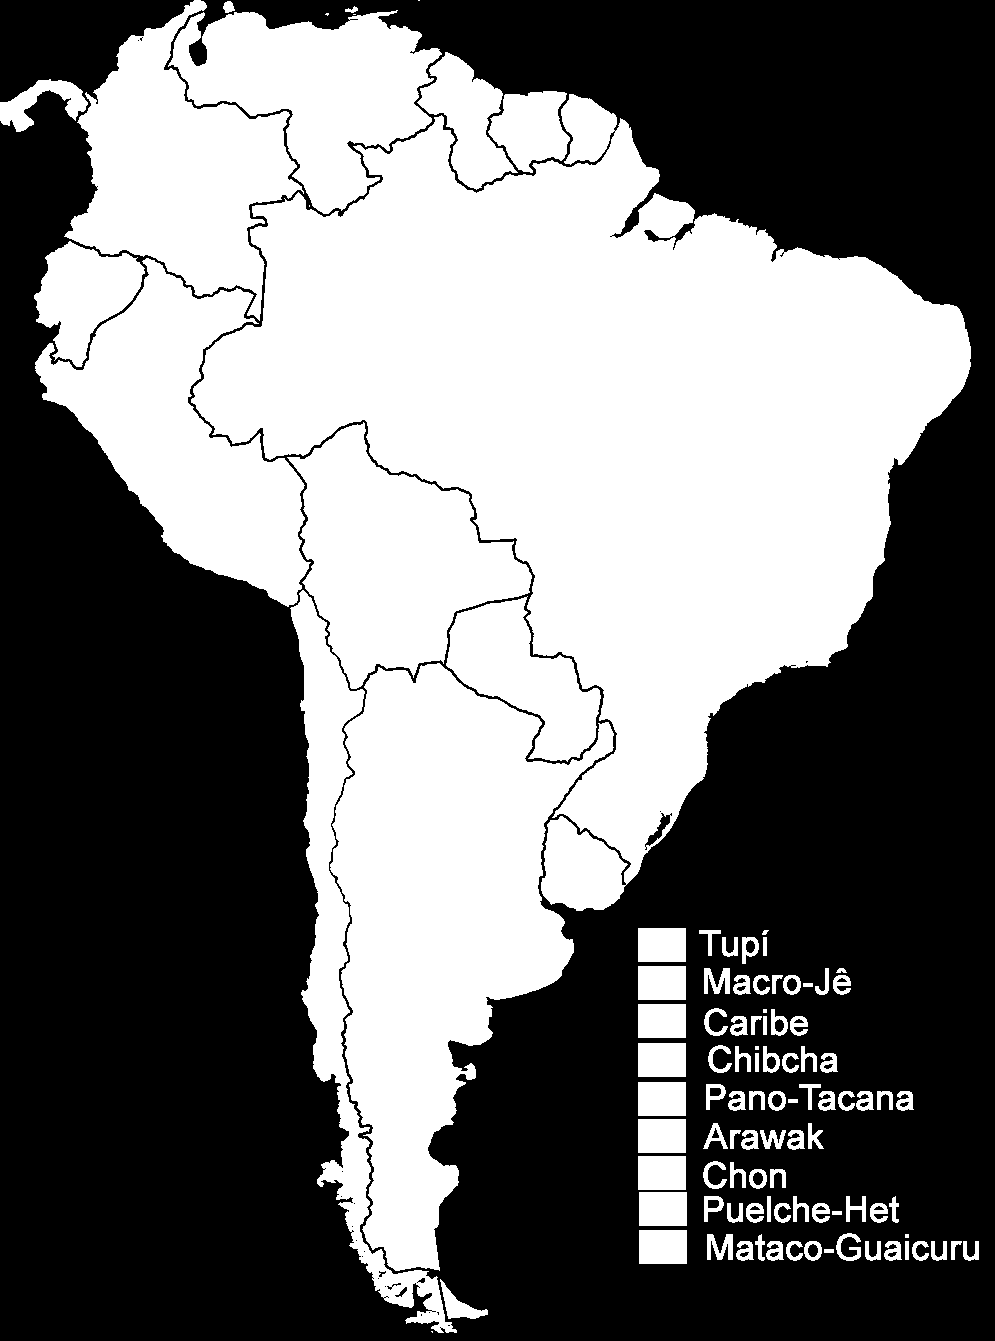 Språken i Sydamerika "SouthAmerican families" by Davius - Own work.